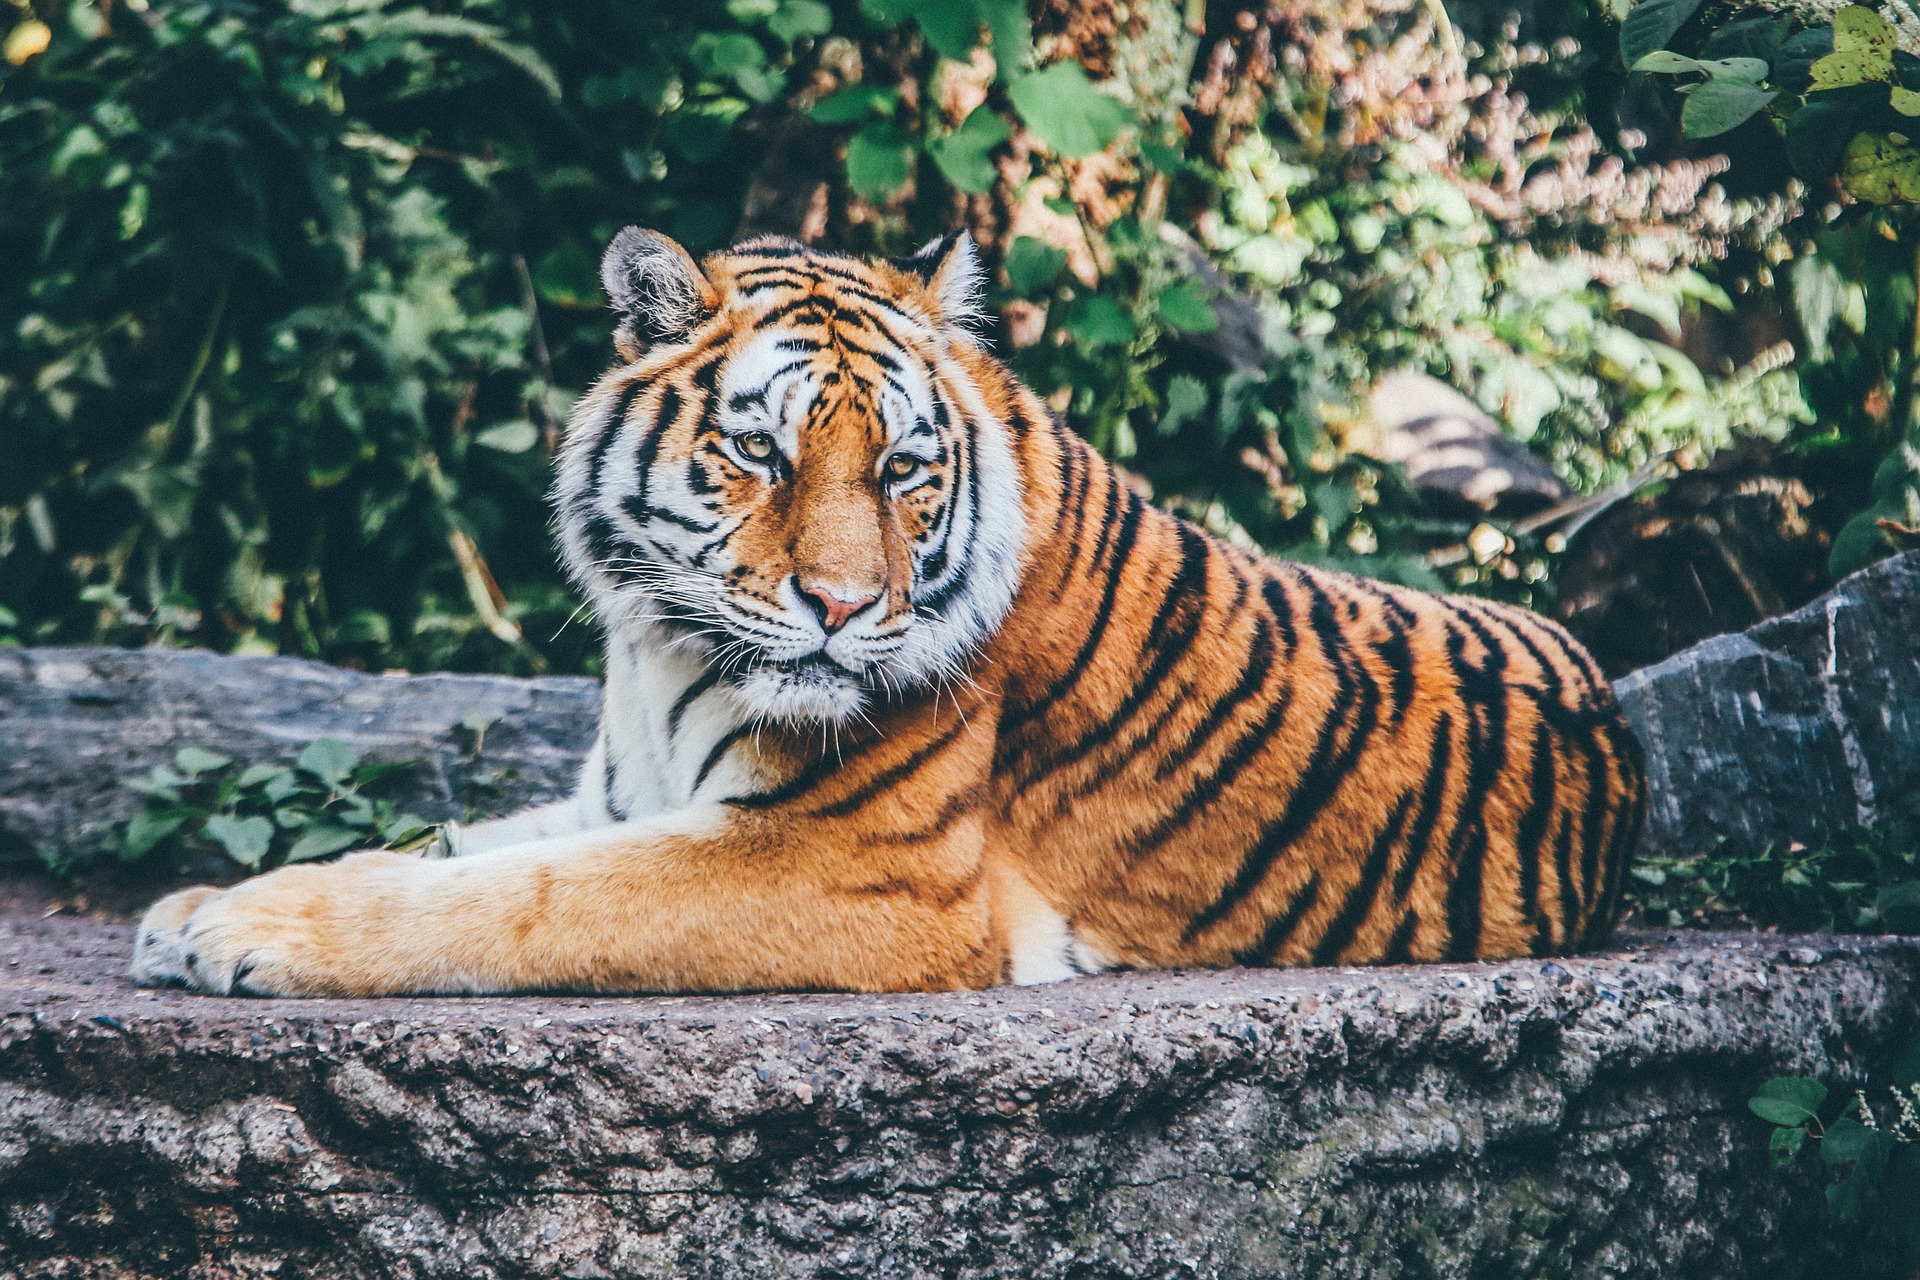 Tiger at the Big Cat Habit & Gulf Coast Sanctuary